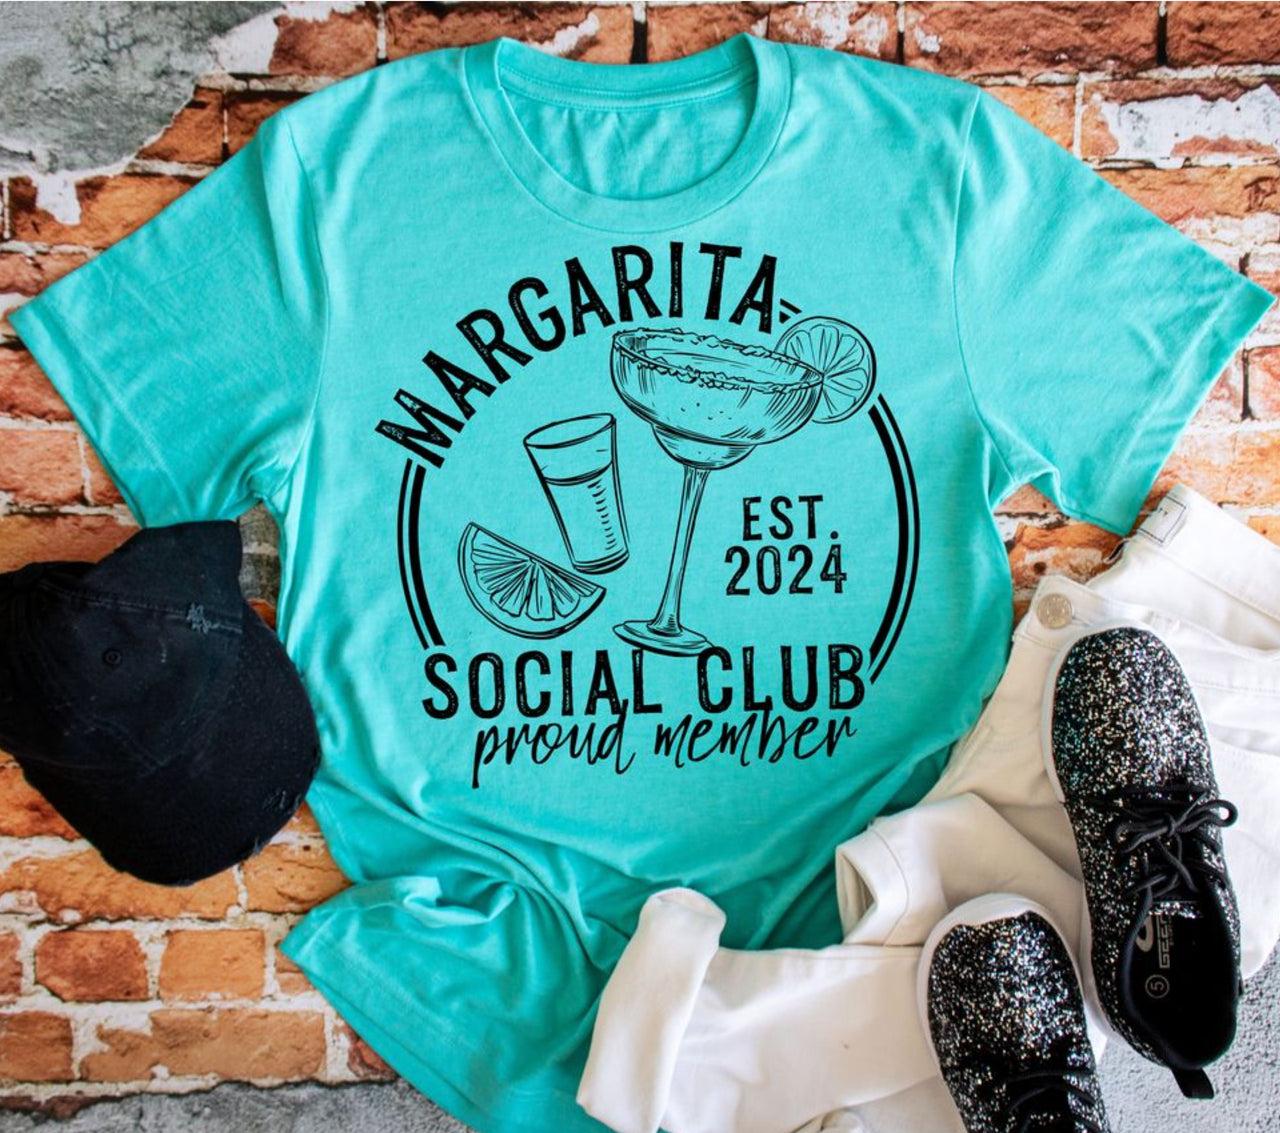 Adult - Unisex Tee (Margarita Social Club)